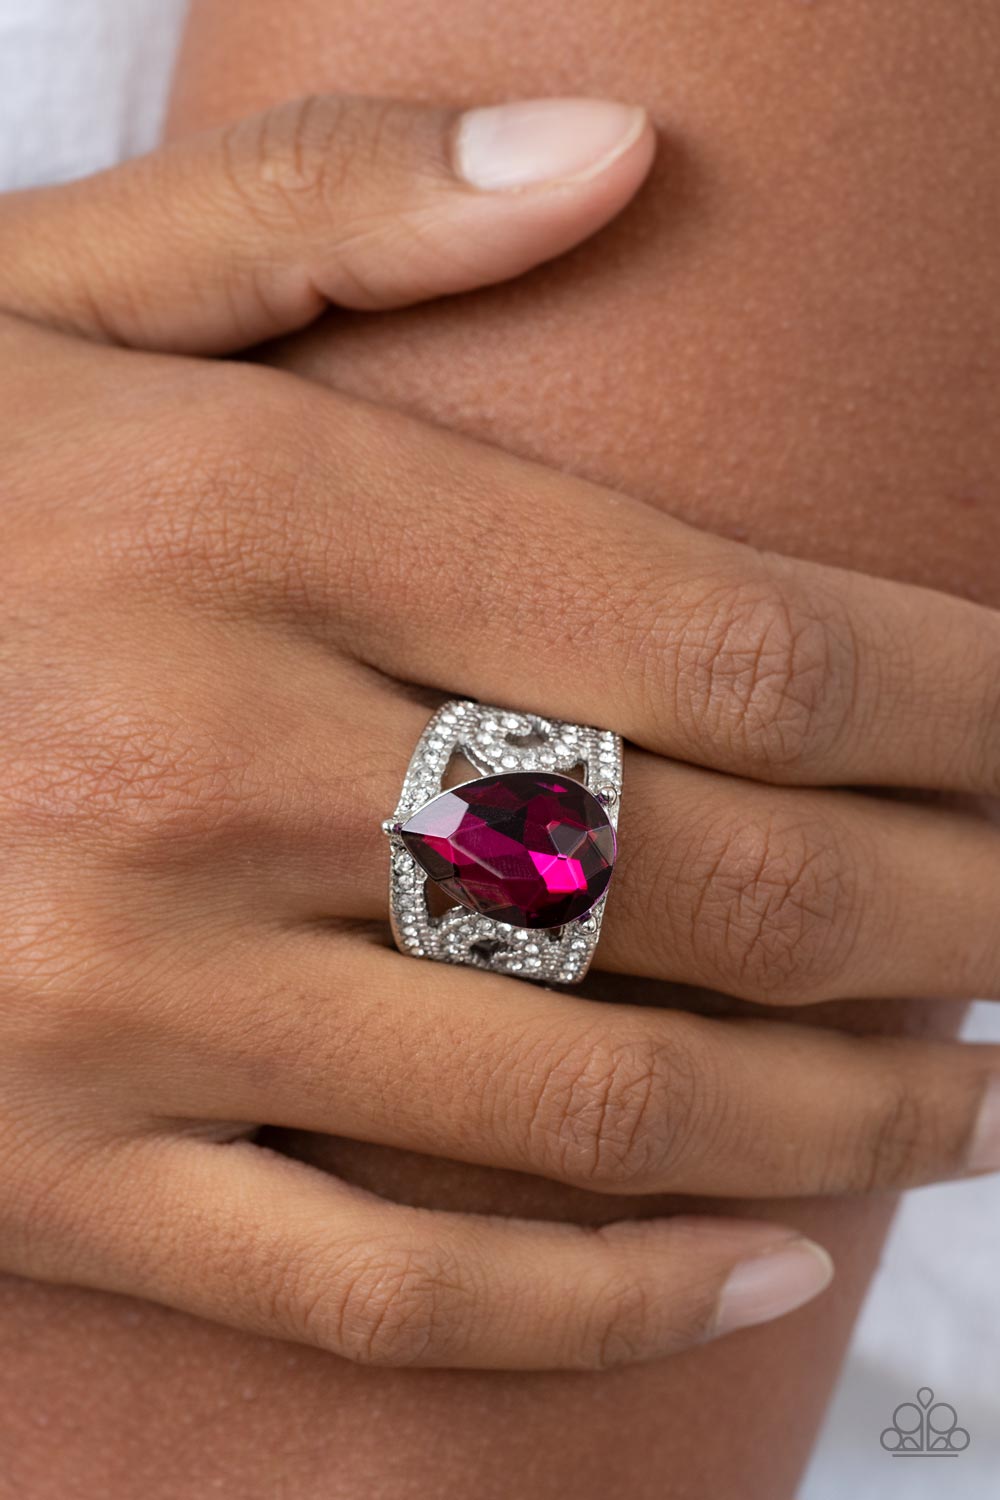 Kinda a Big Deal Pink Rhinestone Ring - Paparazzi Accessories- lightbox - CarasShop.com - $5 Jewelry by Cara Jewels